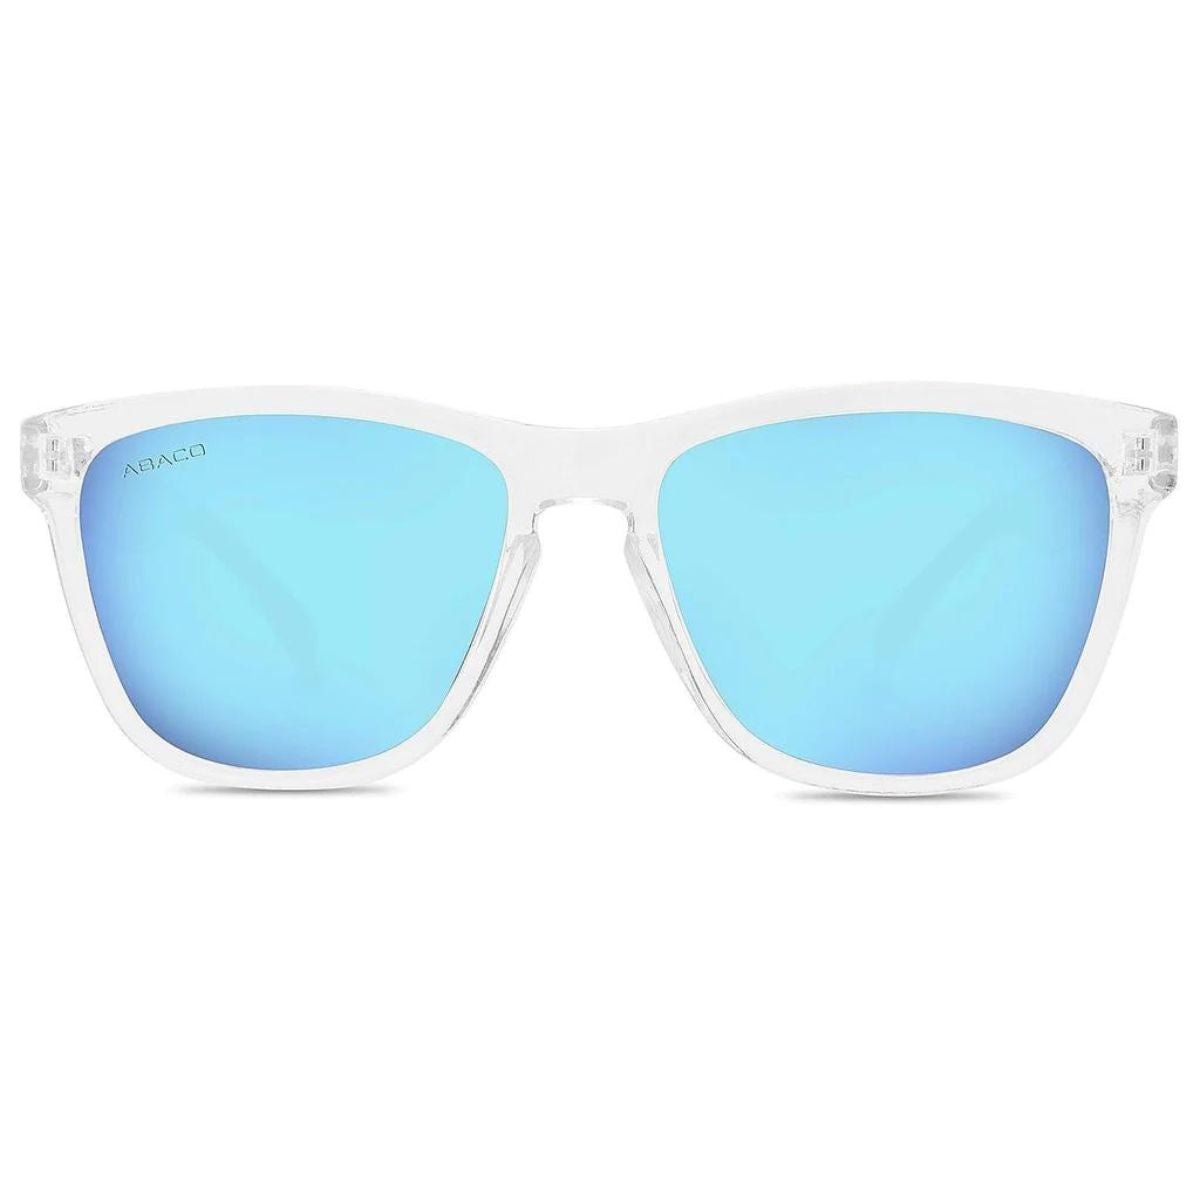 Abaco Kai Sunglasses in Crystal Clear/Caribbean Blue - BoardCo